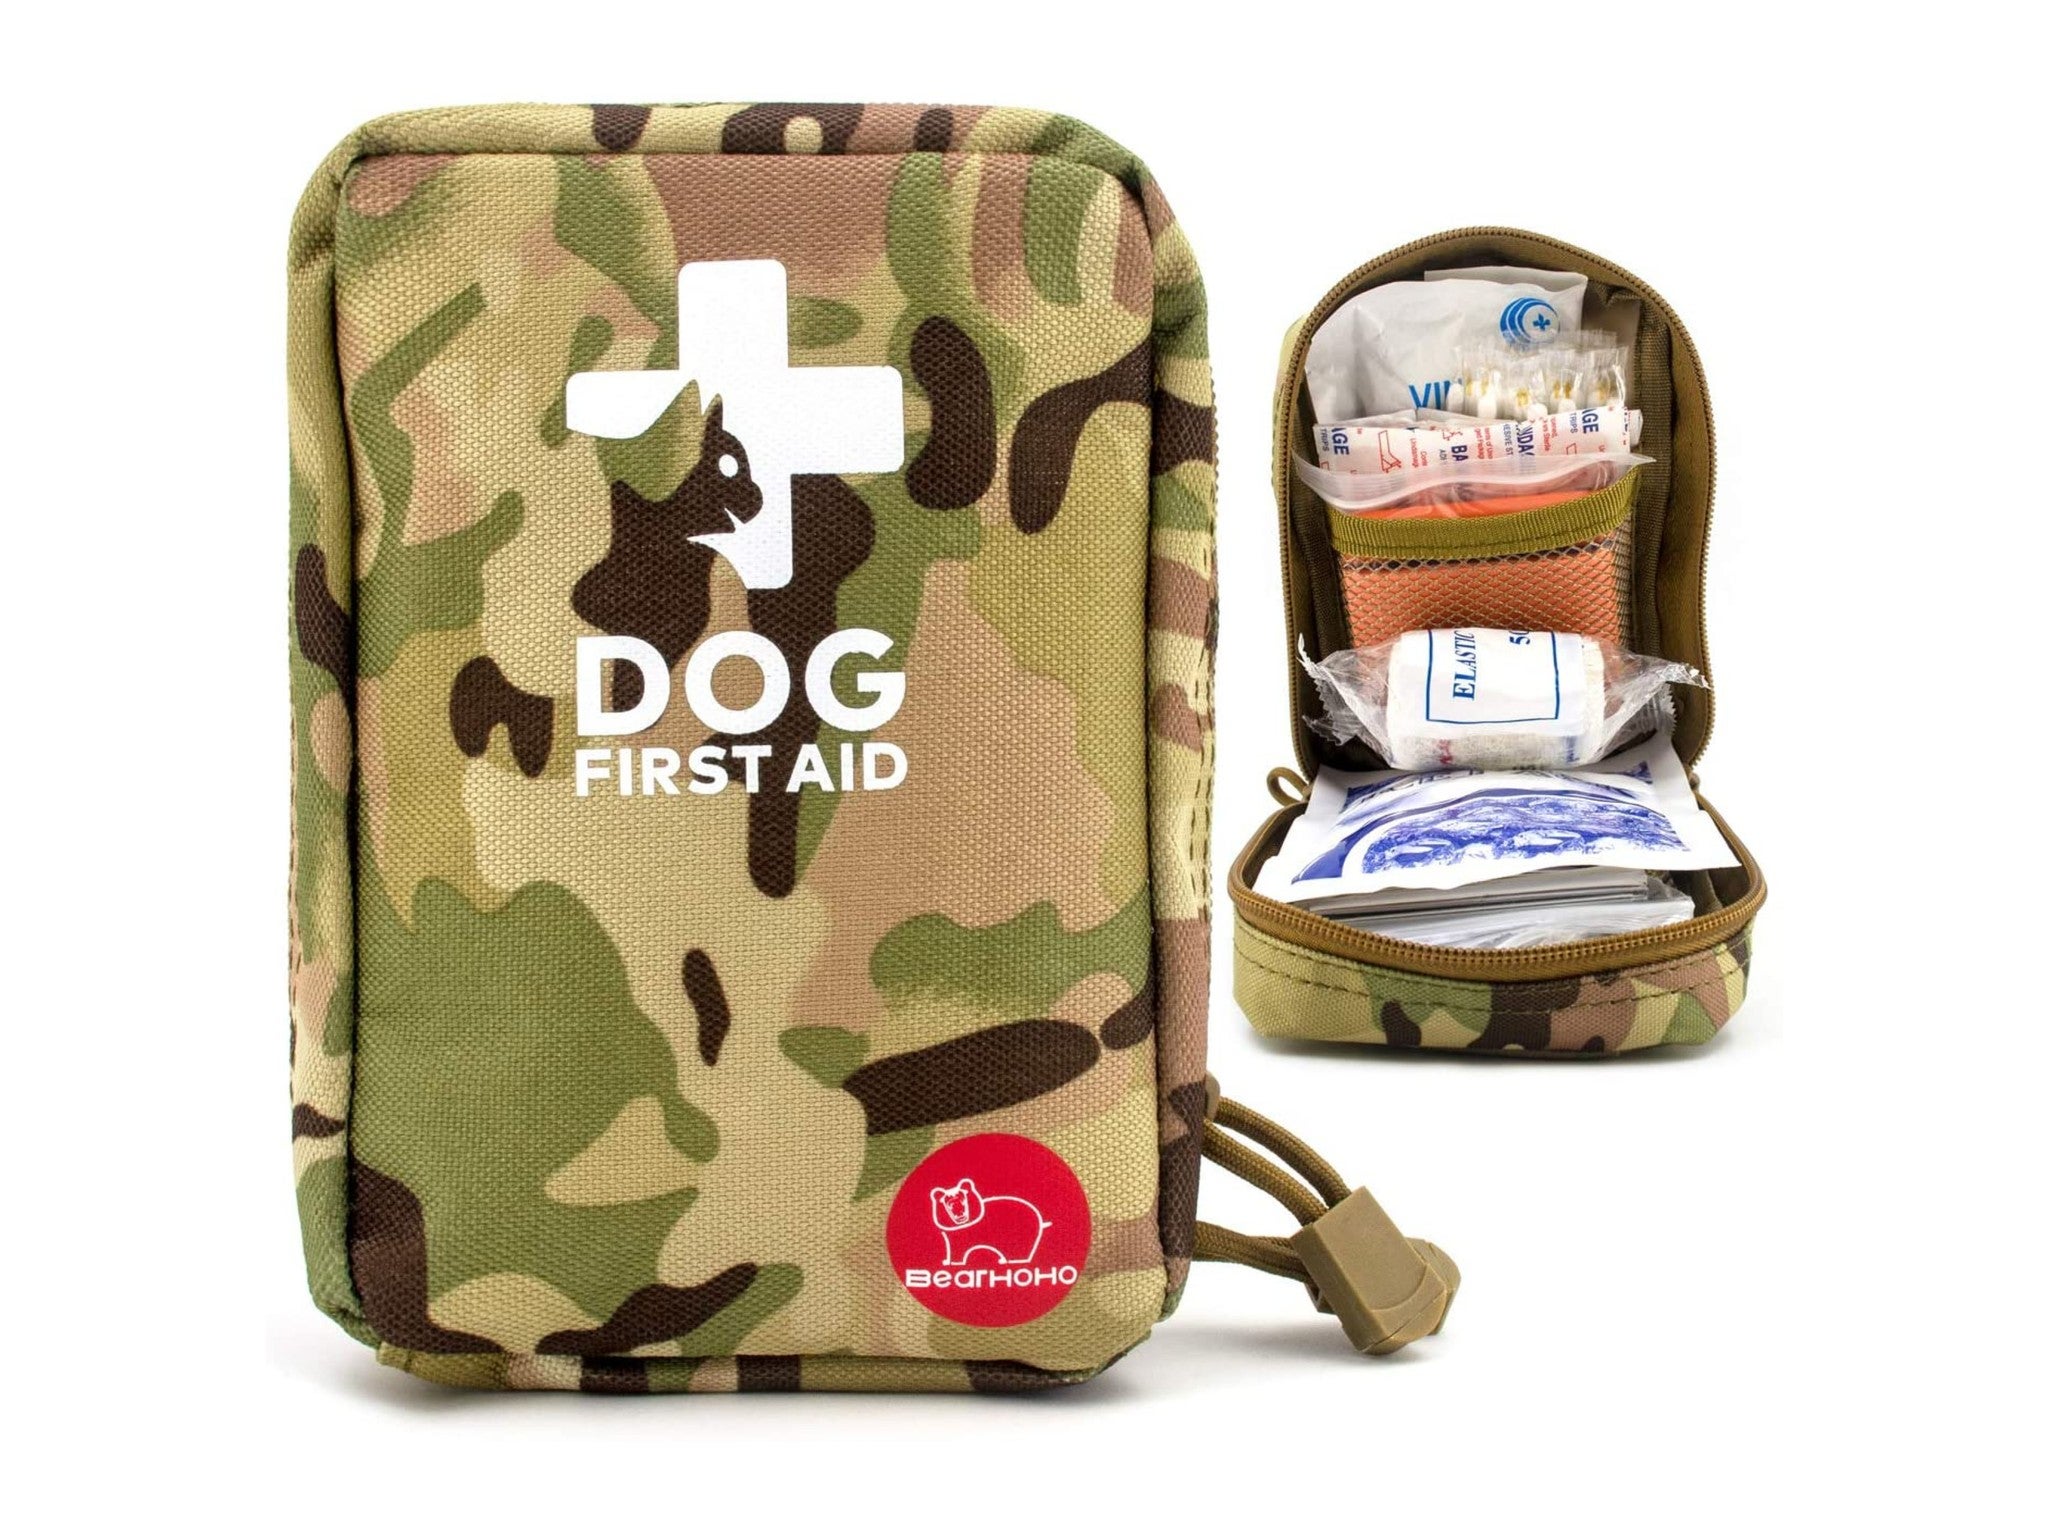 BearHoHo Dog First Aid Kit indybest.jpg